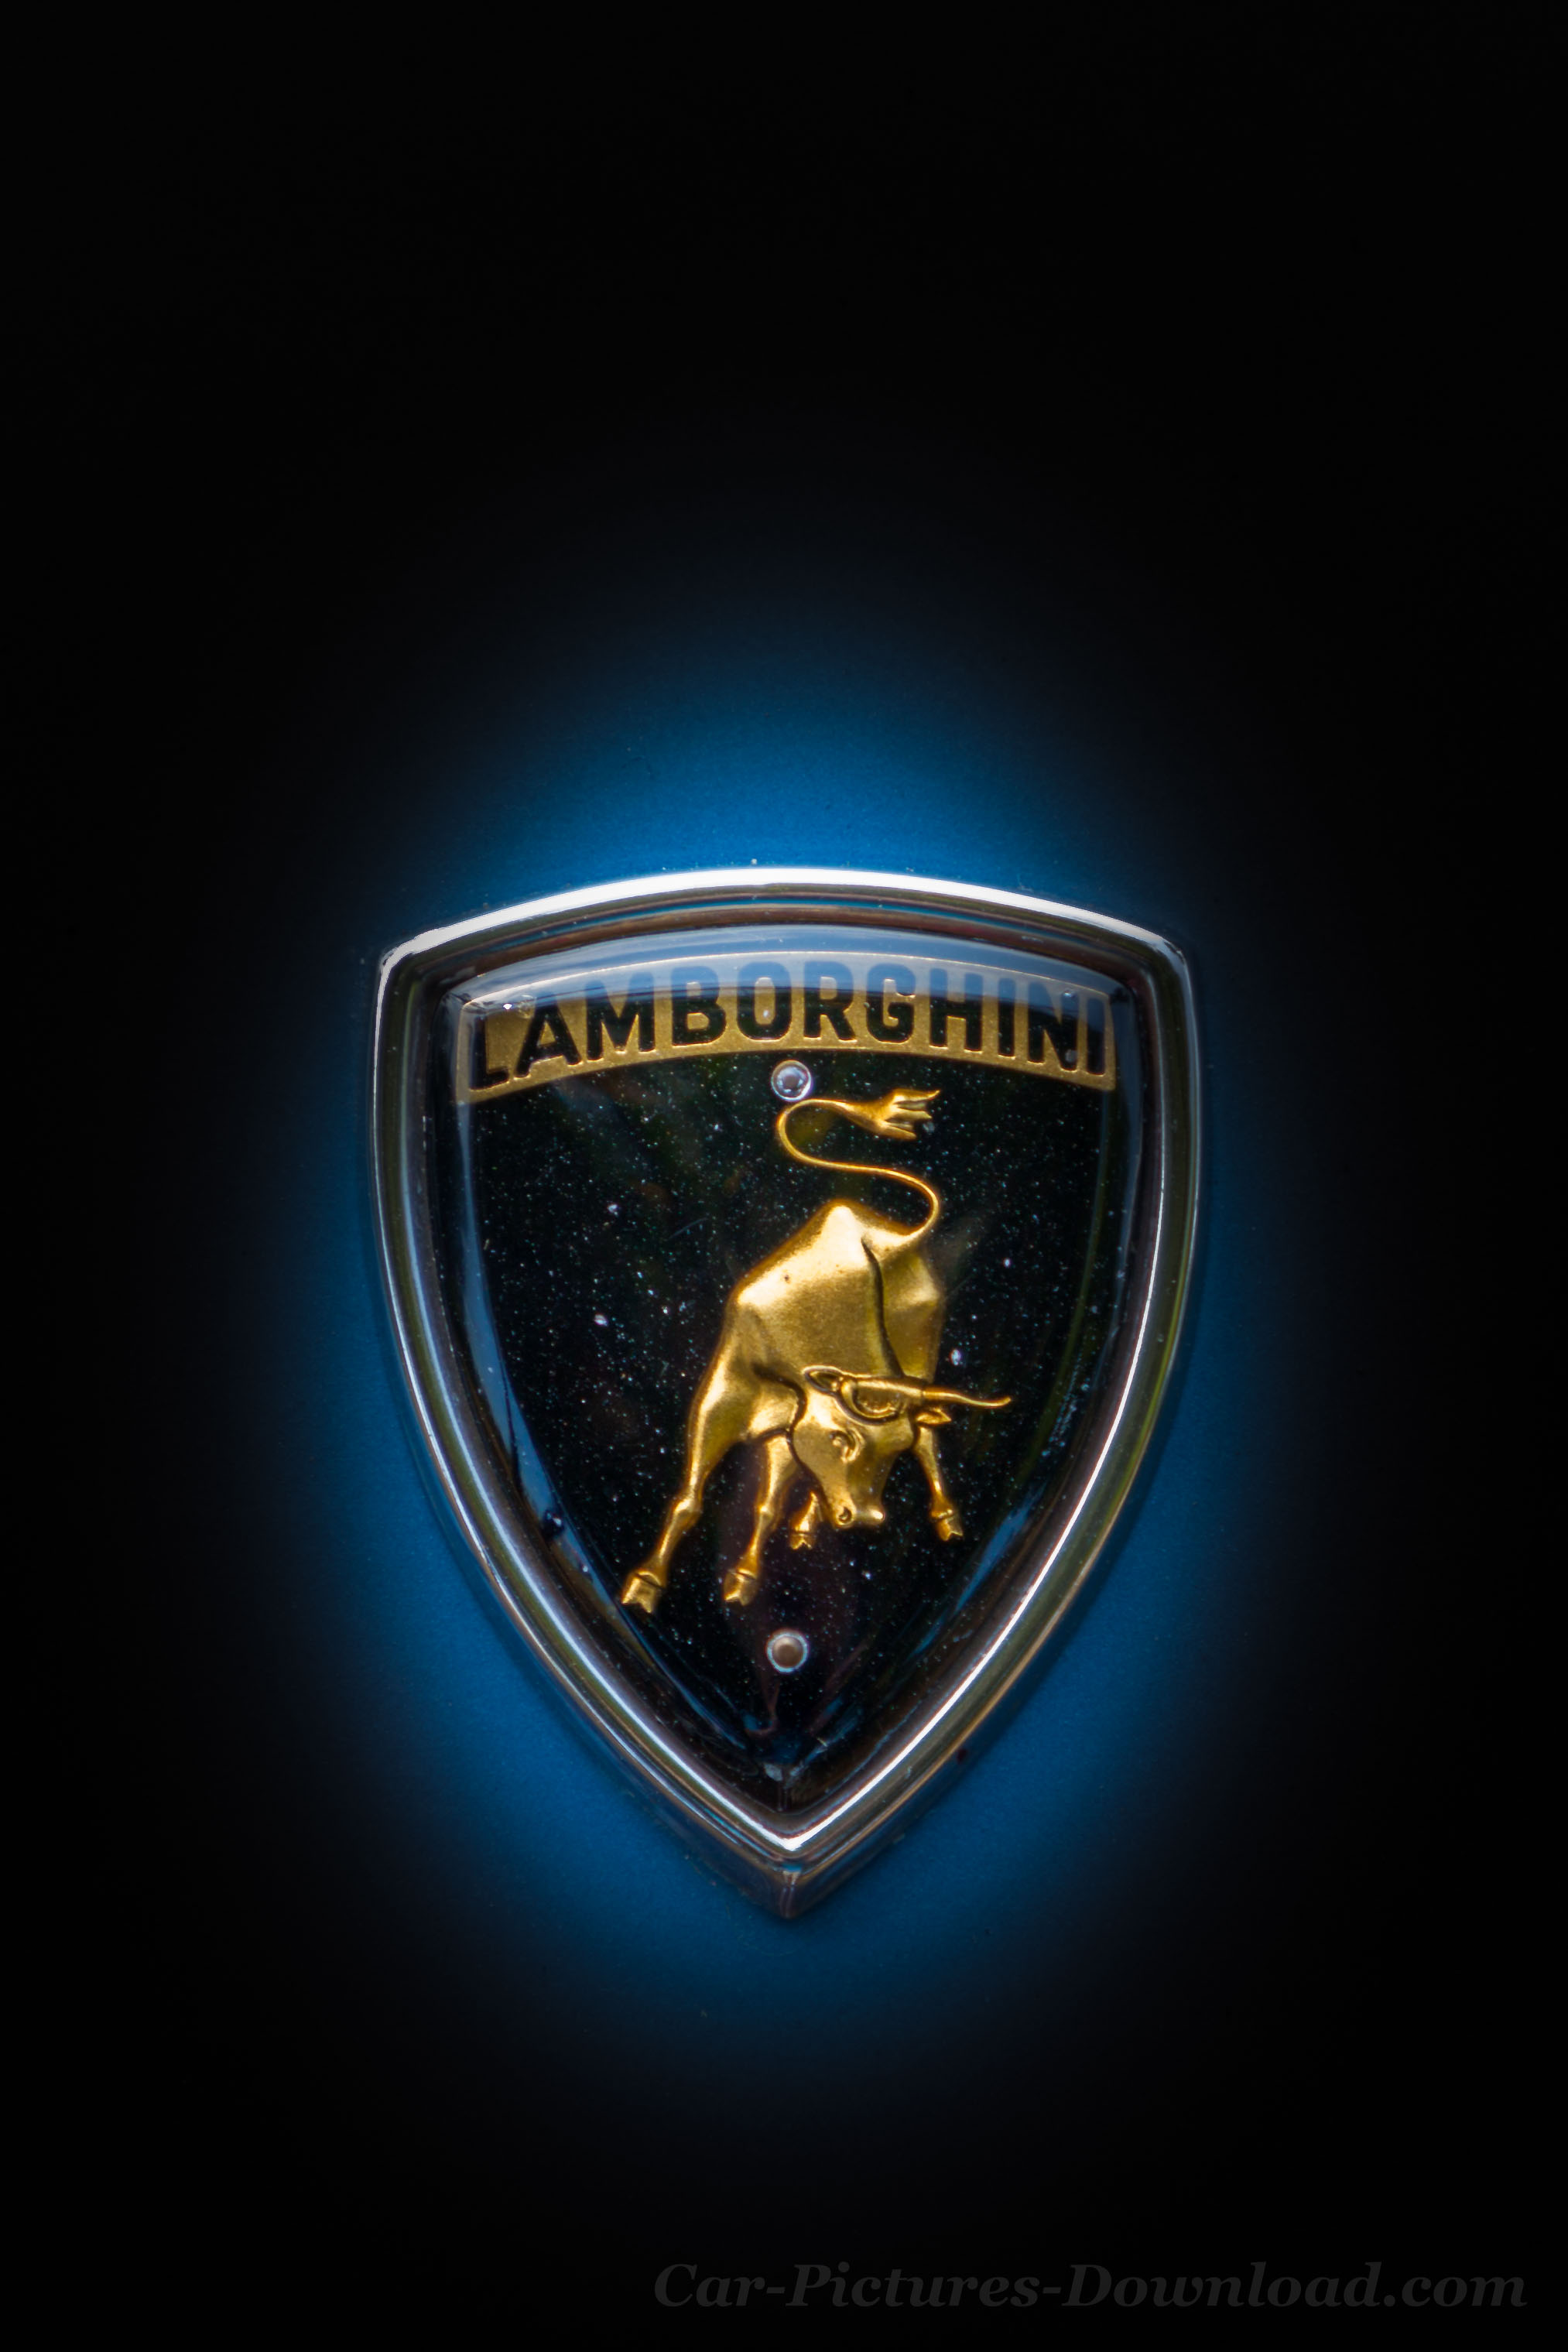 Lamborghini Wallpaper Images   4K Ultra HD Screens   Download 2026x3039